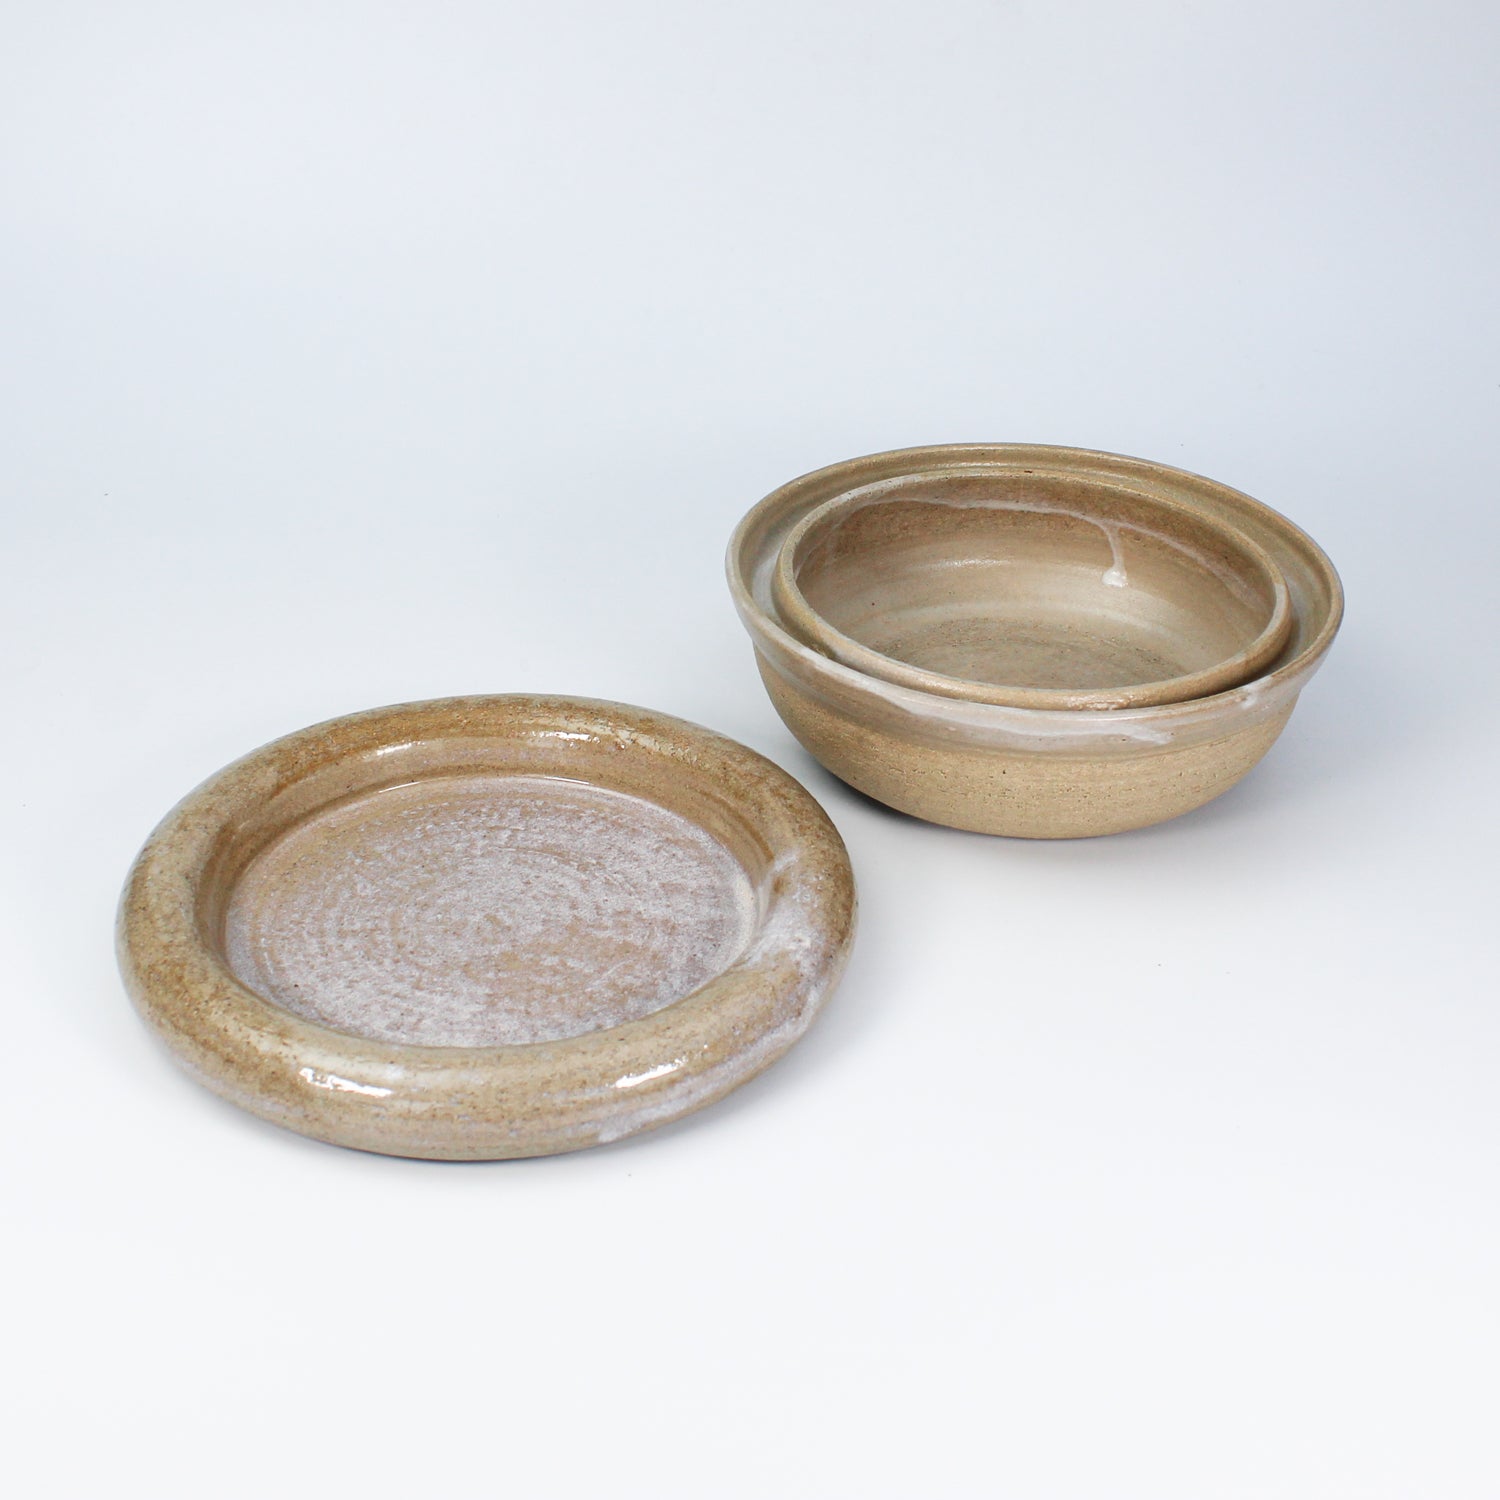 Natural gloss pottery dog food bowl with matching dog water bowl